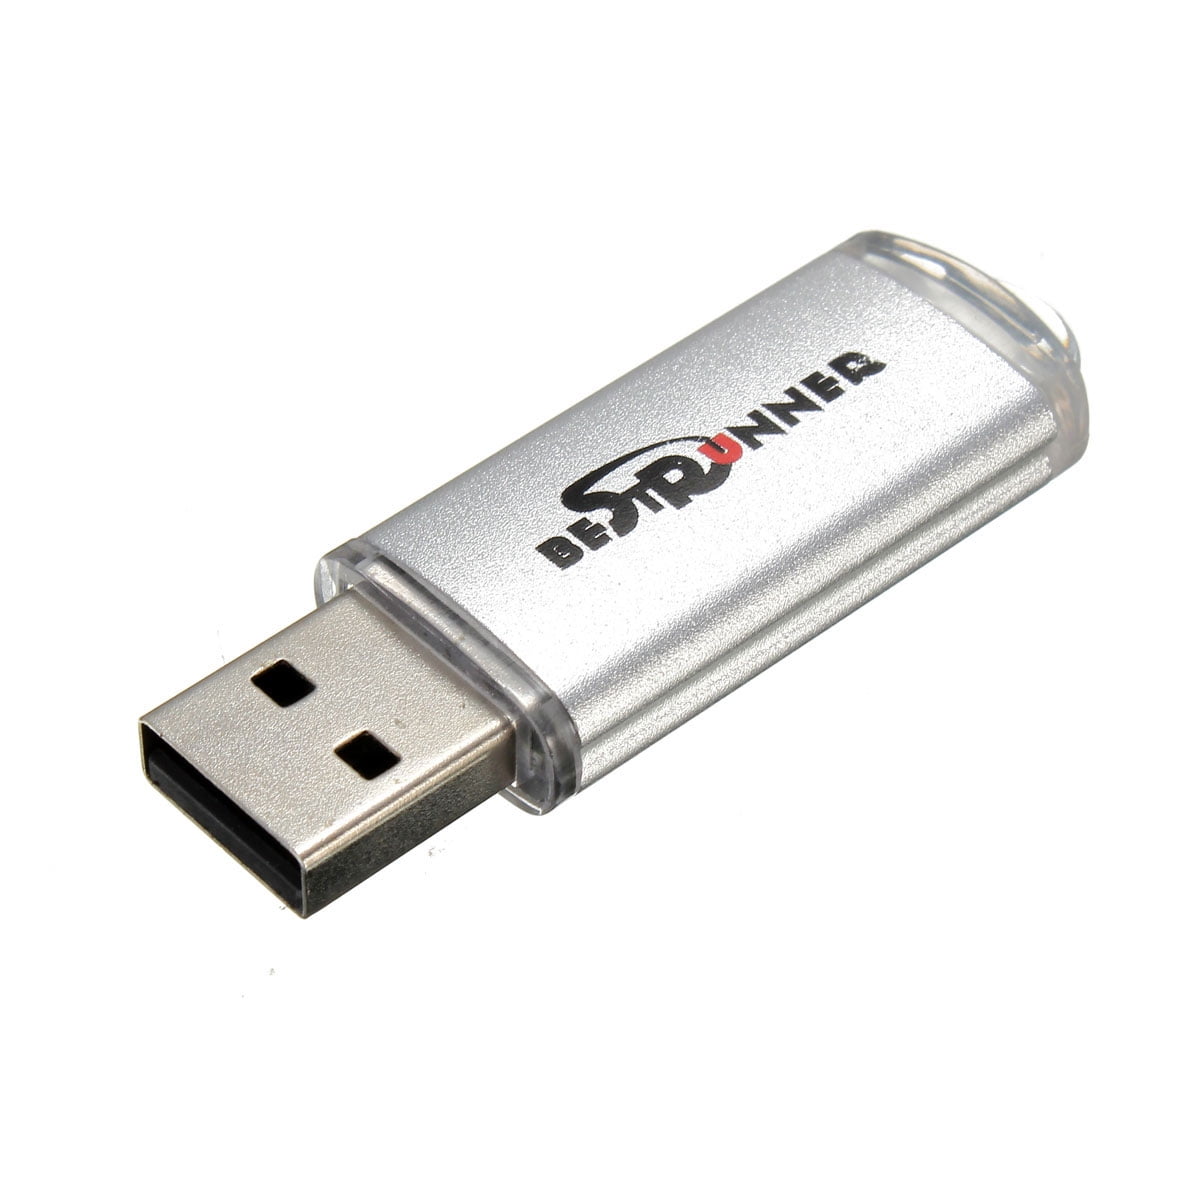 128MB USB 2.0 Flash Memory Stick U Pen Drives Data Storage Thumb Gifts ! 